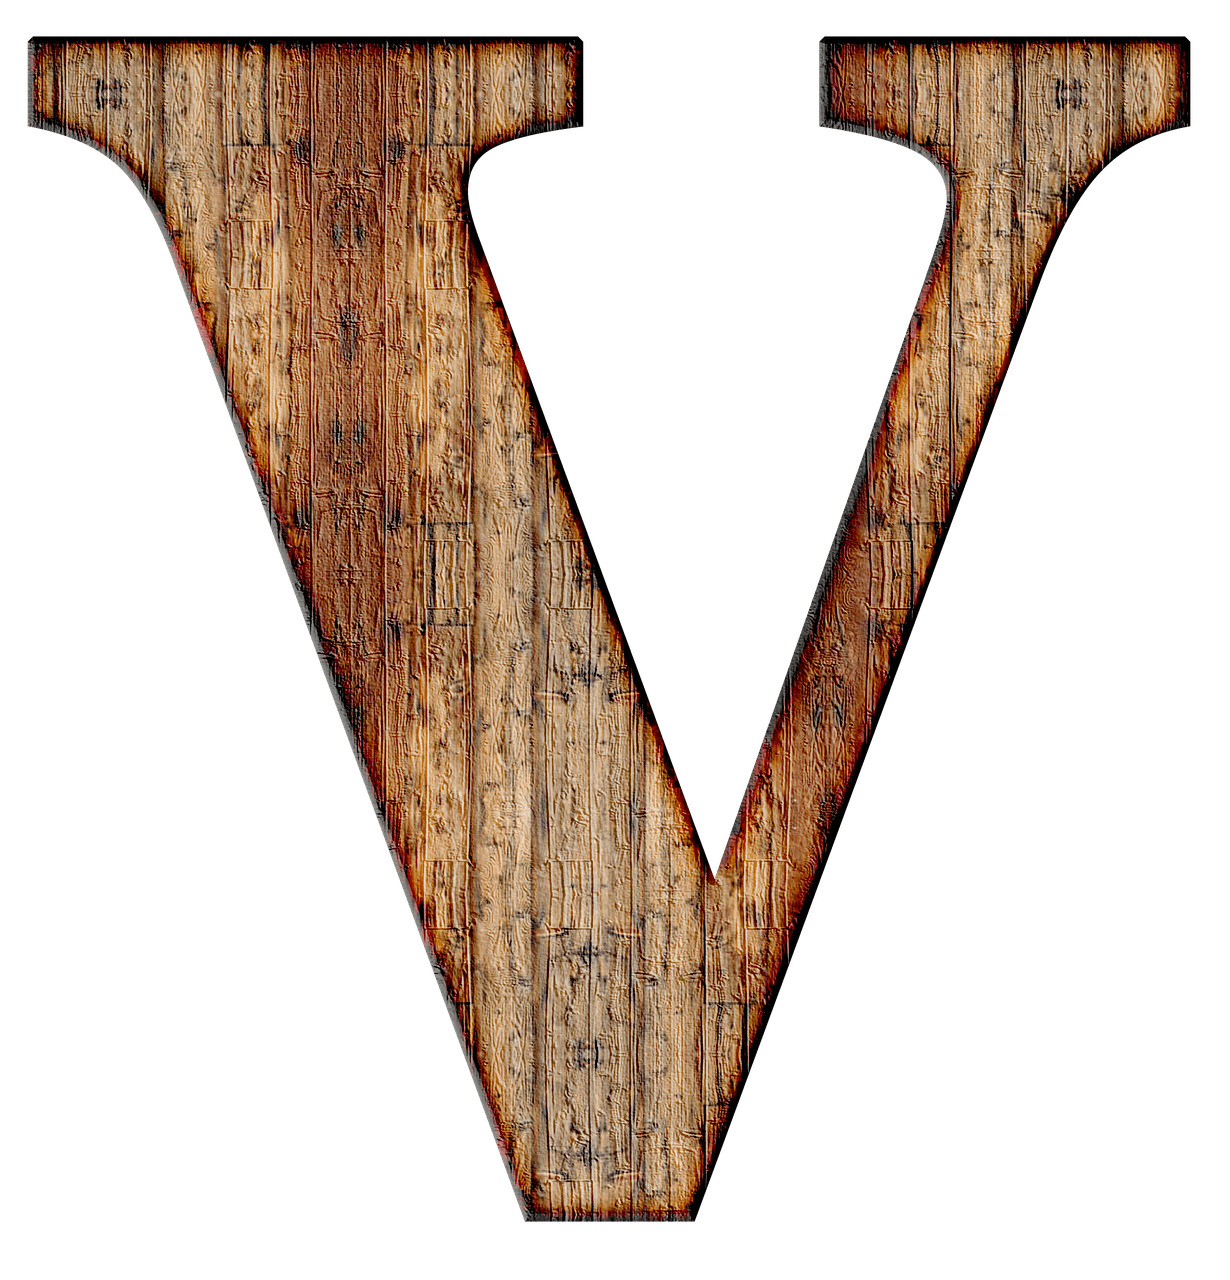 Wooden Capital Letter V icons